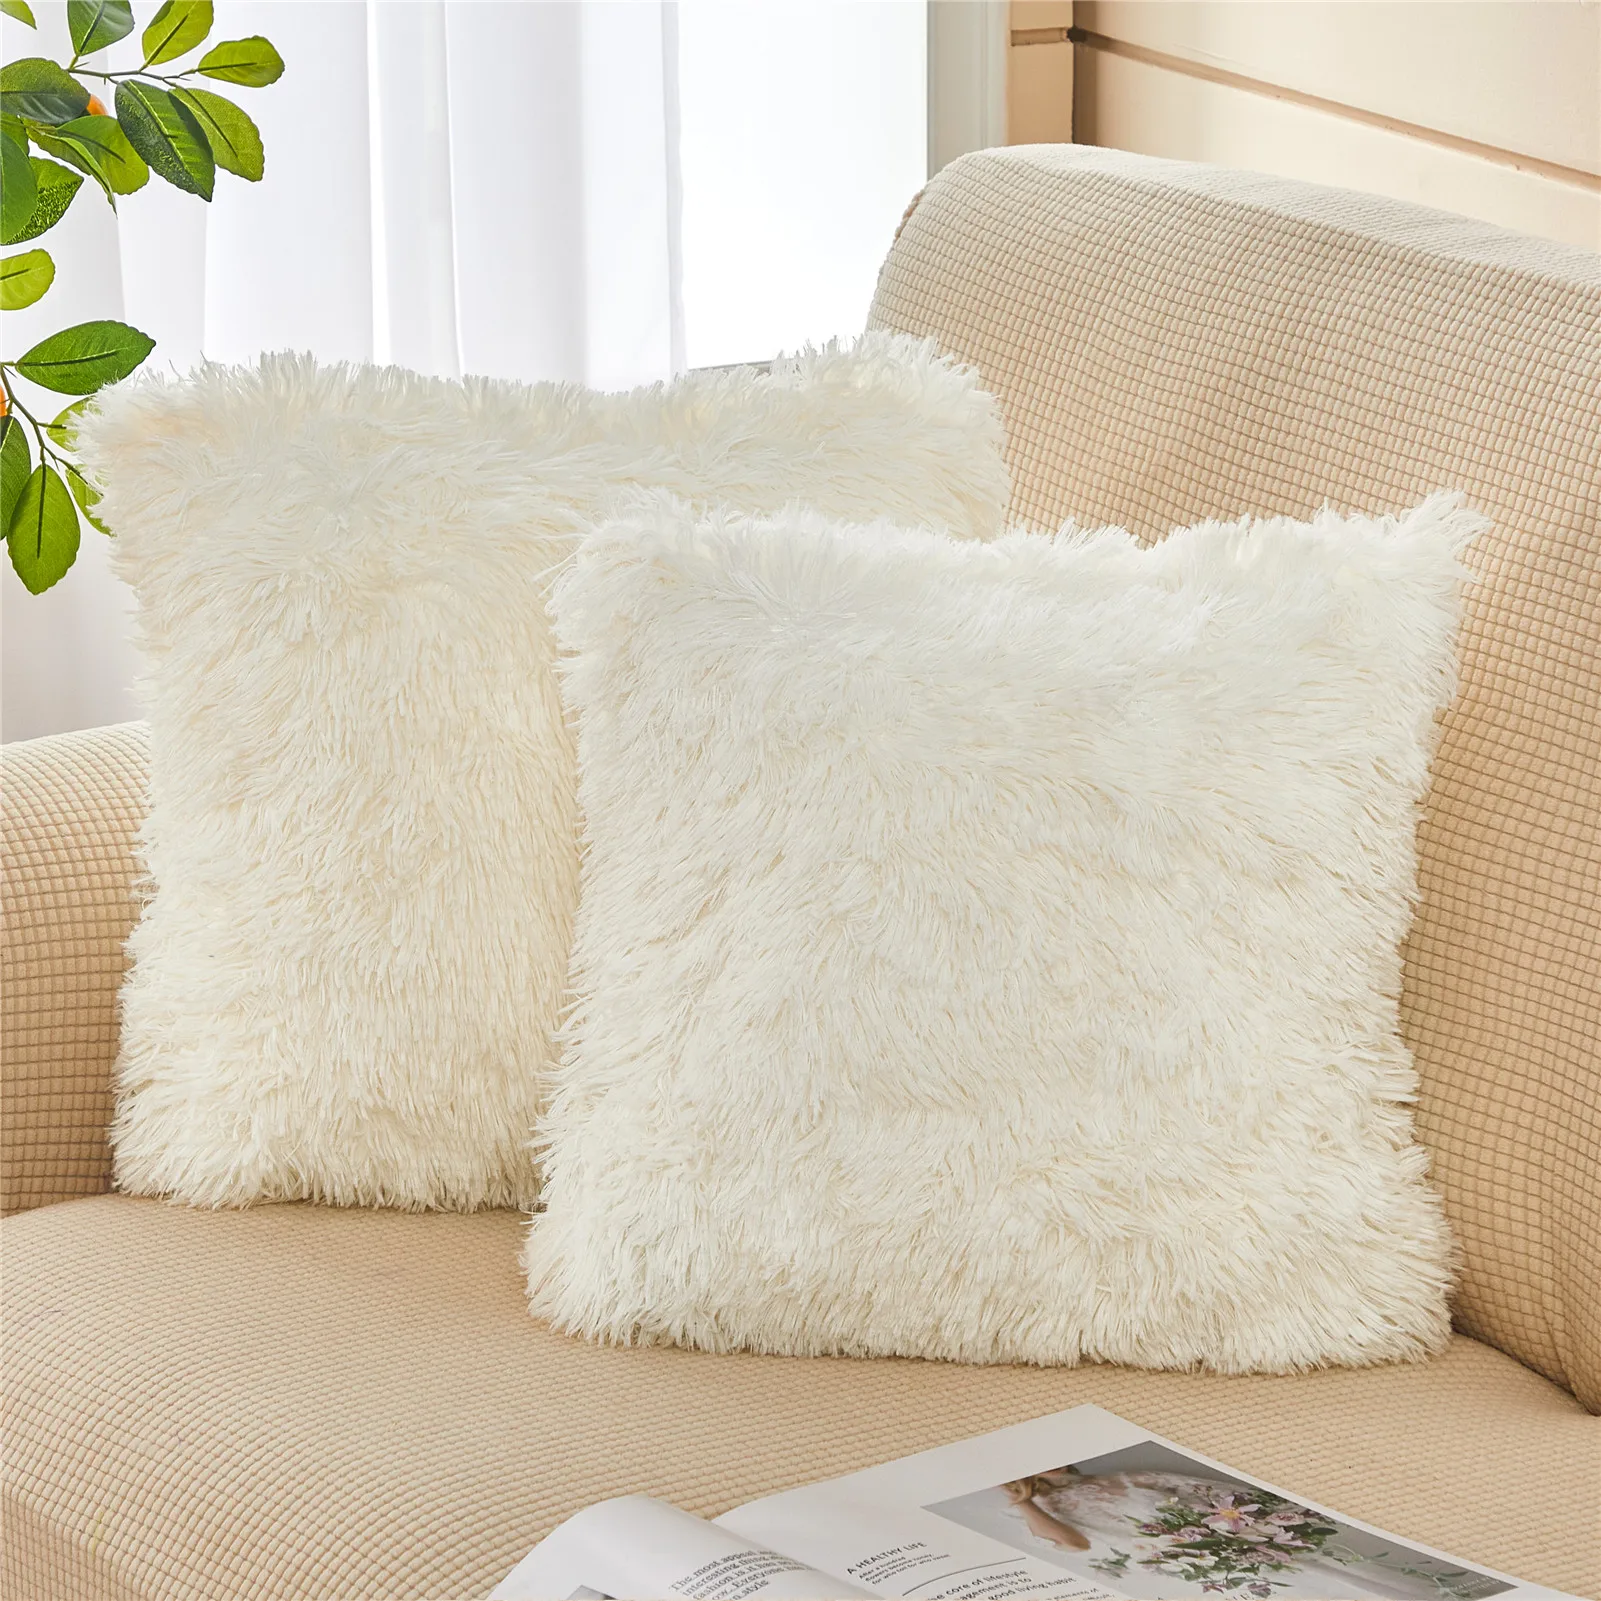 Cushion Cover Soft Fur Plush Home Decor Pillowcase Living Room Bedroom Sofa Decorative Pillow Cover 45x45cm Shaggy Fluffy Cover